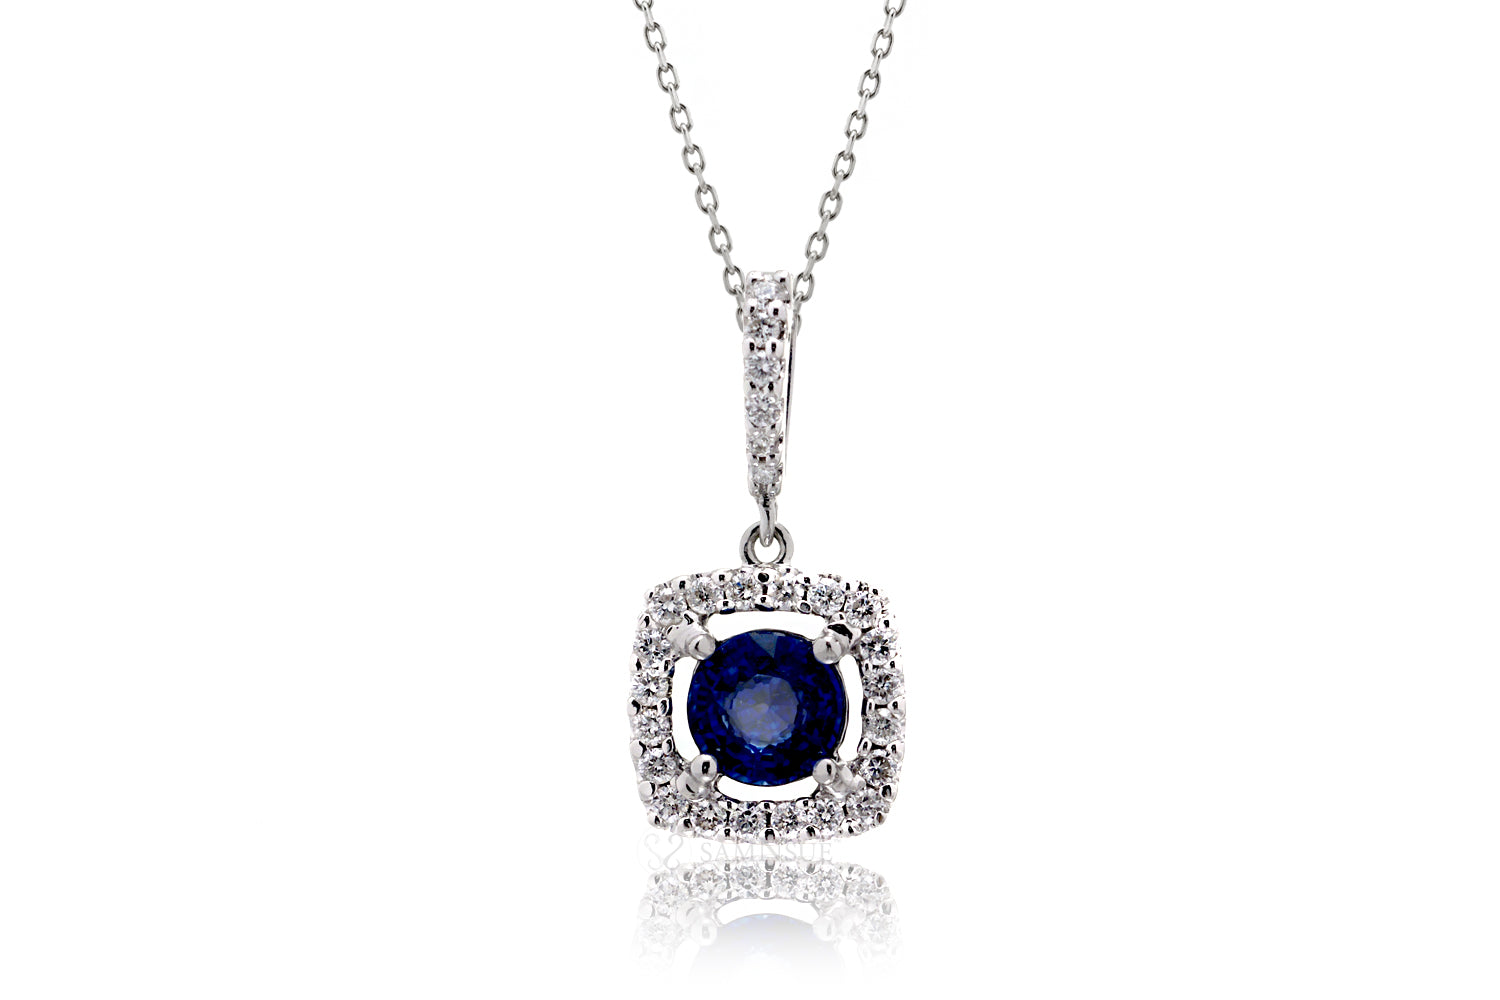 The Round Sapphire With Cushion Diamond Halo Pendant